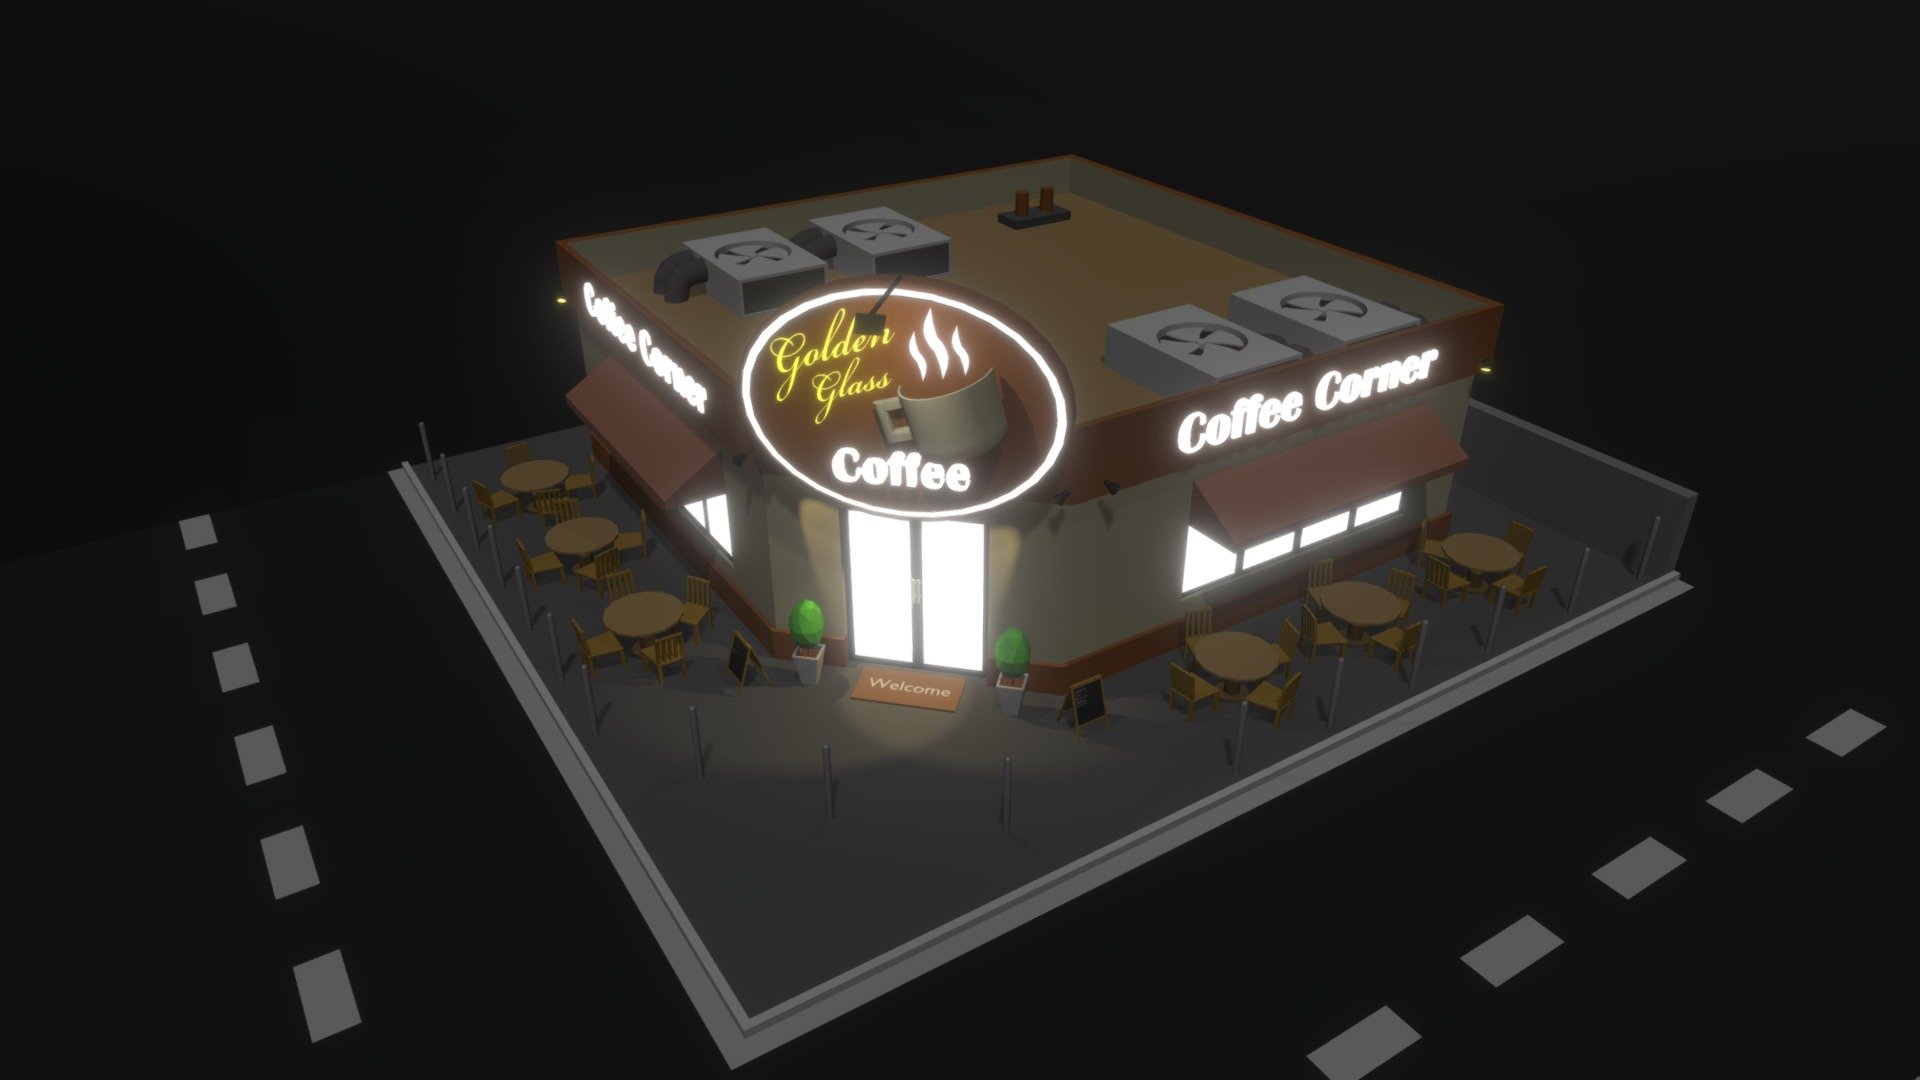 Coffee Corner 3D model for game asset, in night mode with eevee render 3d model